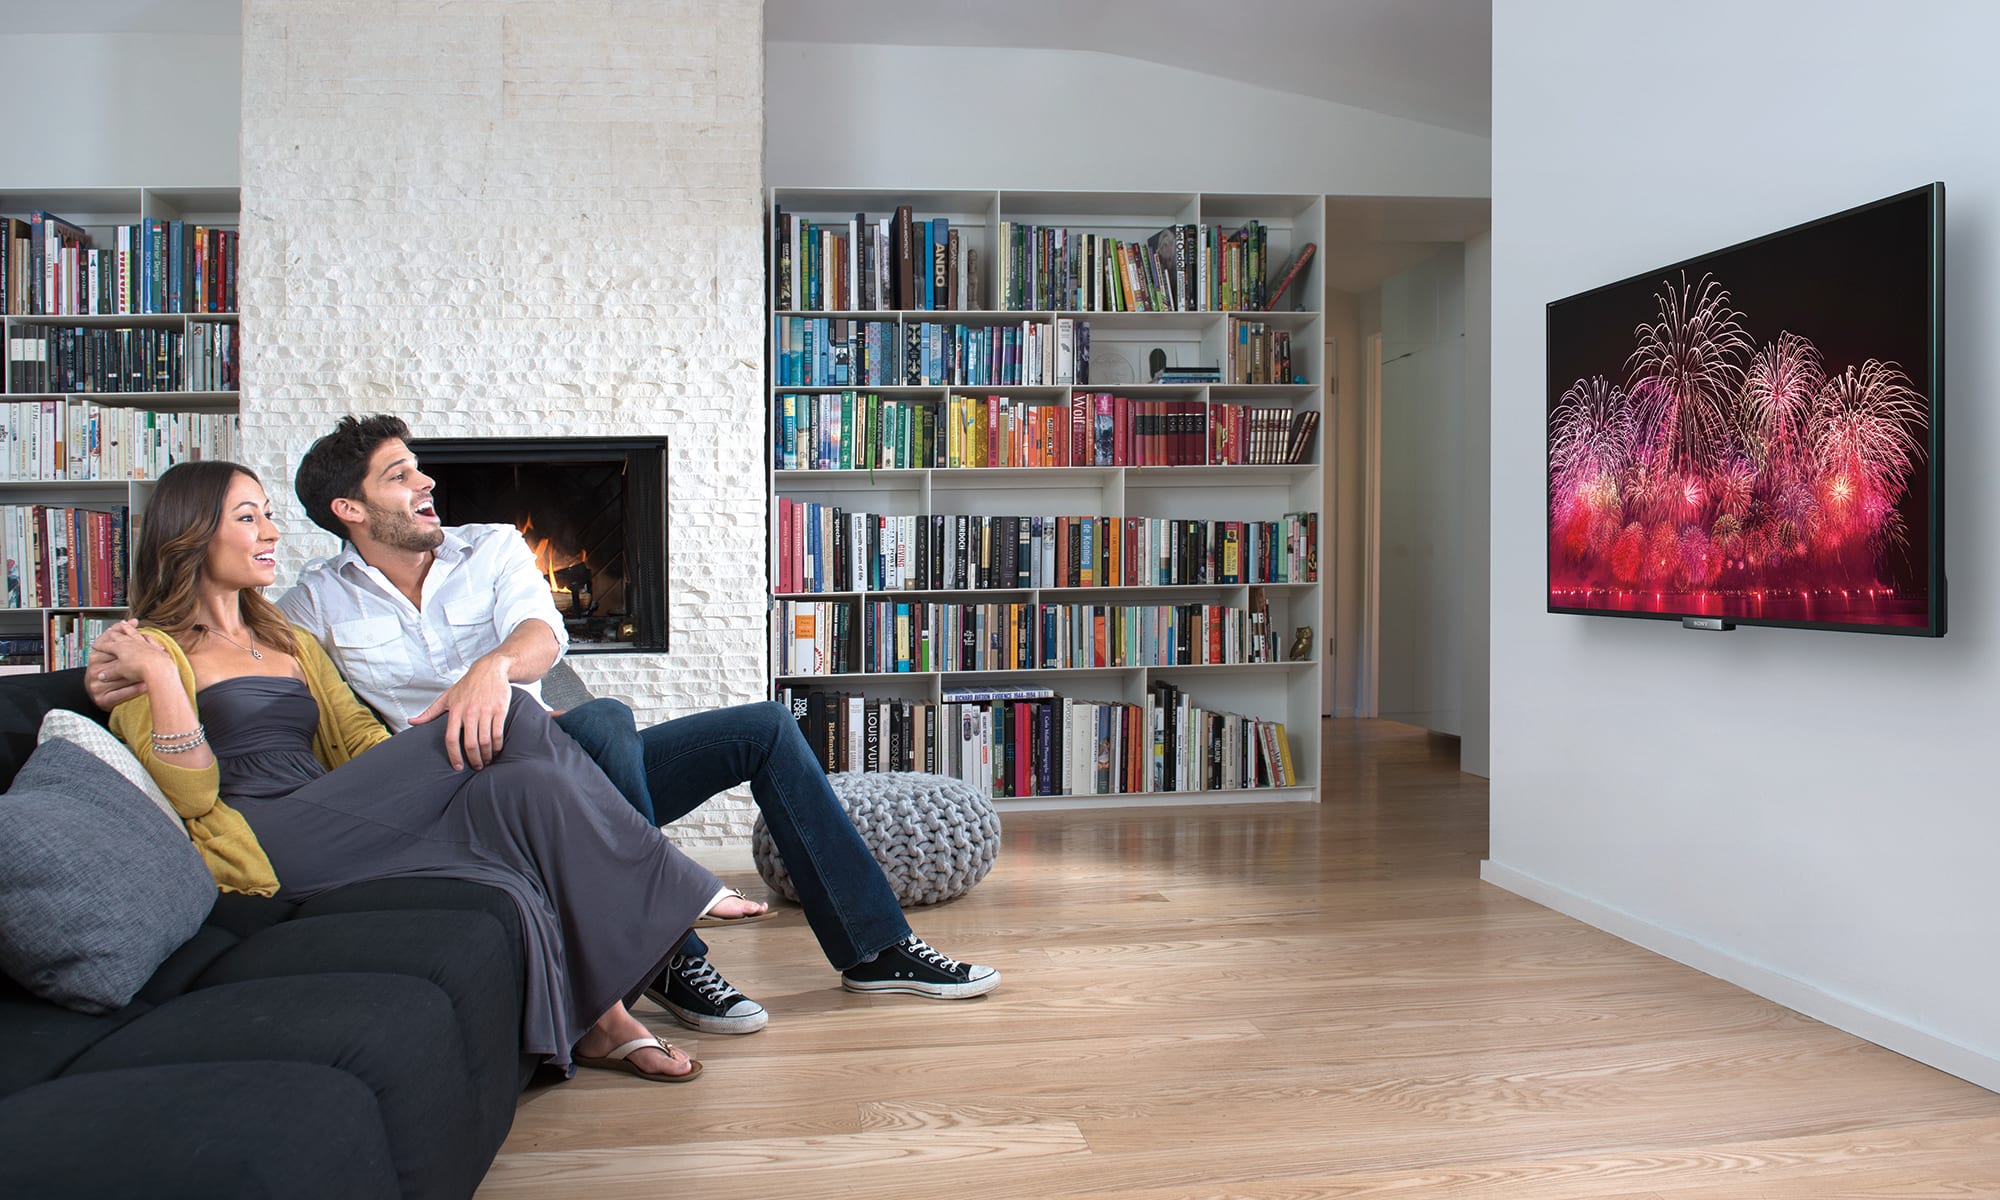 58 Inch Tv In Living Room